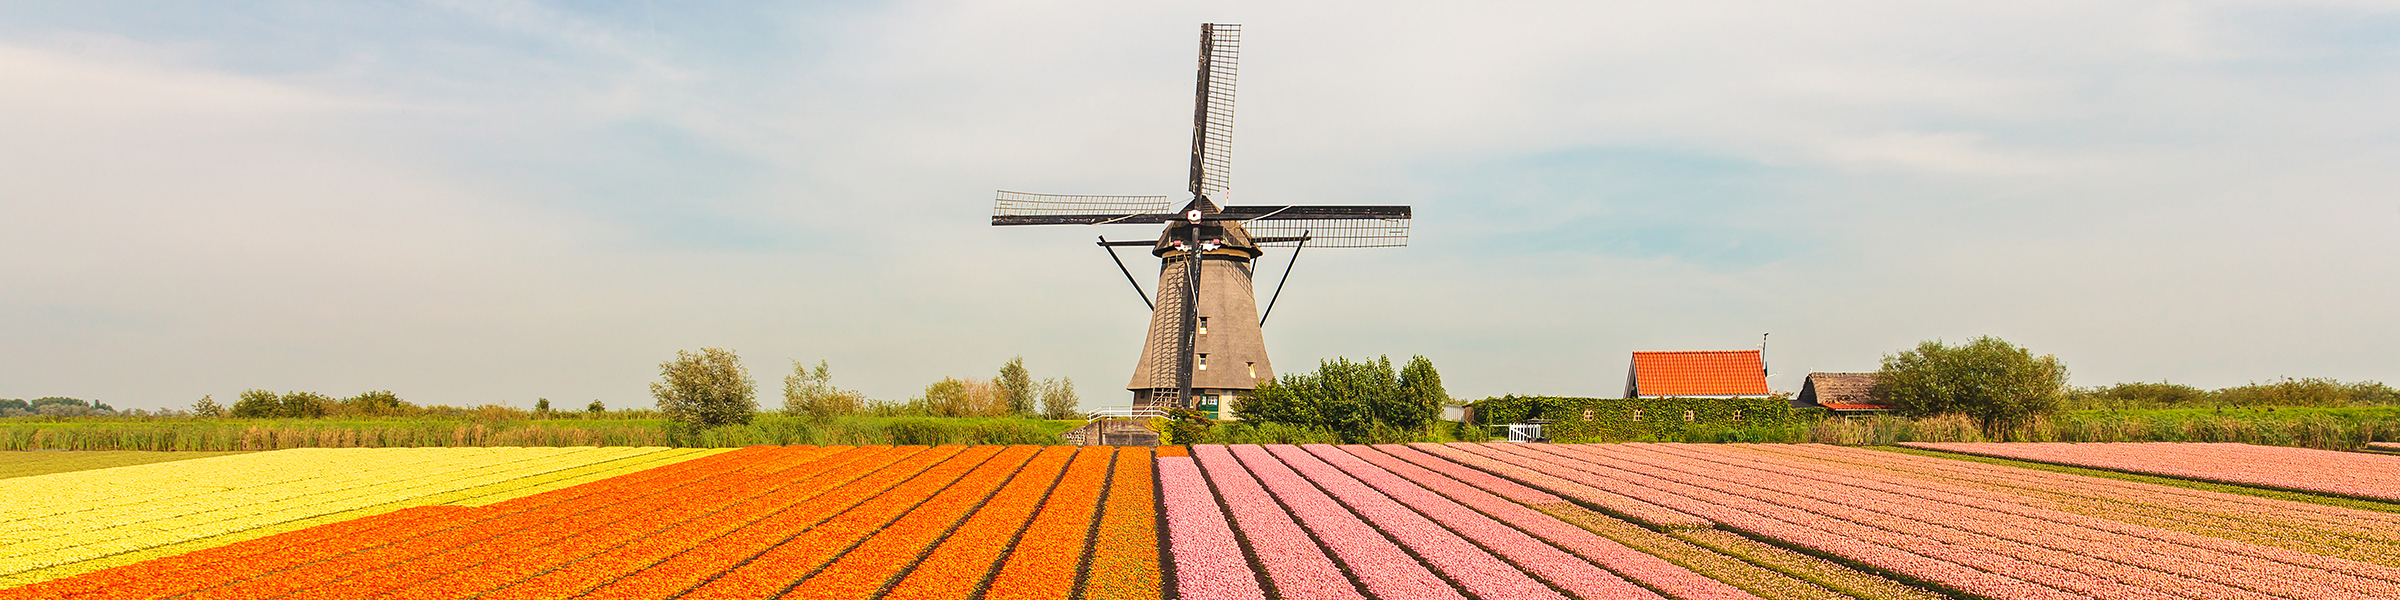 Netherlands Tulip Fileld